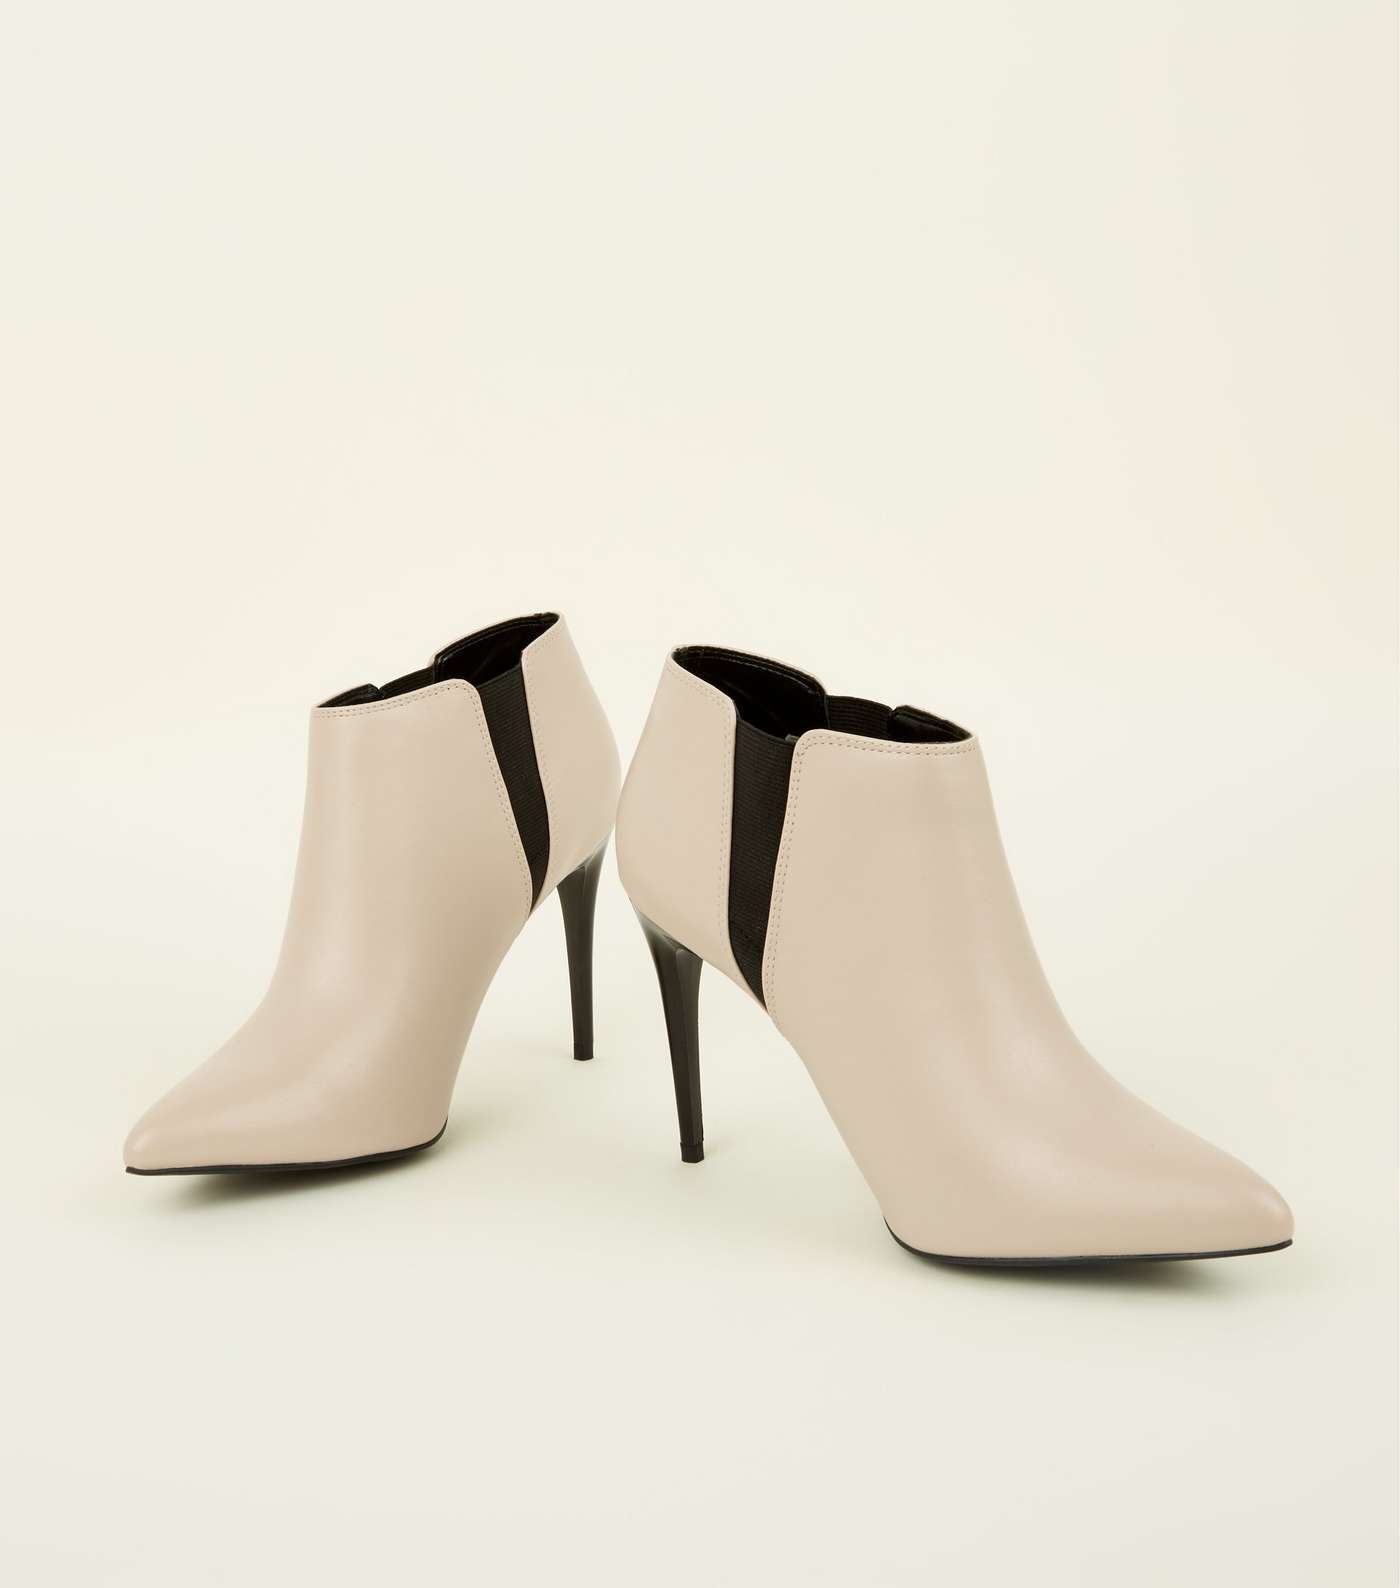 Off White Stiletto Heel Chelsea Shoe Boots Image 4